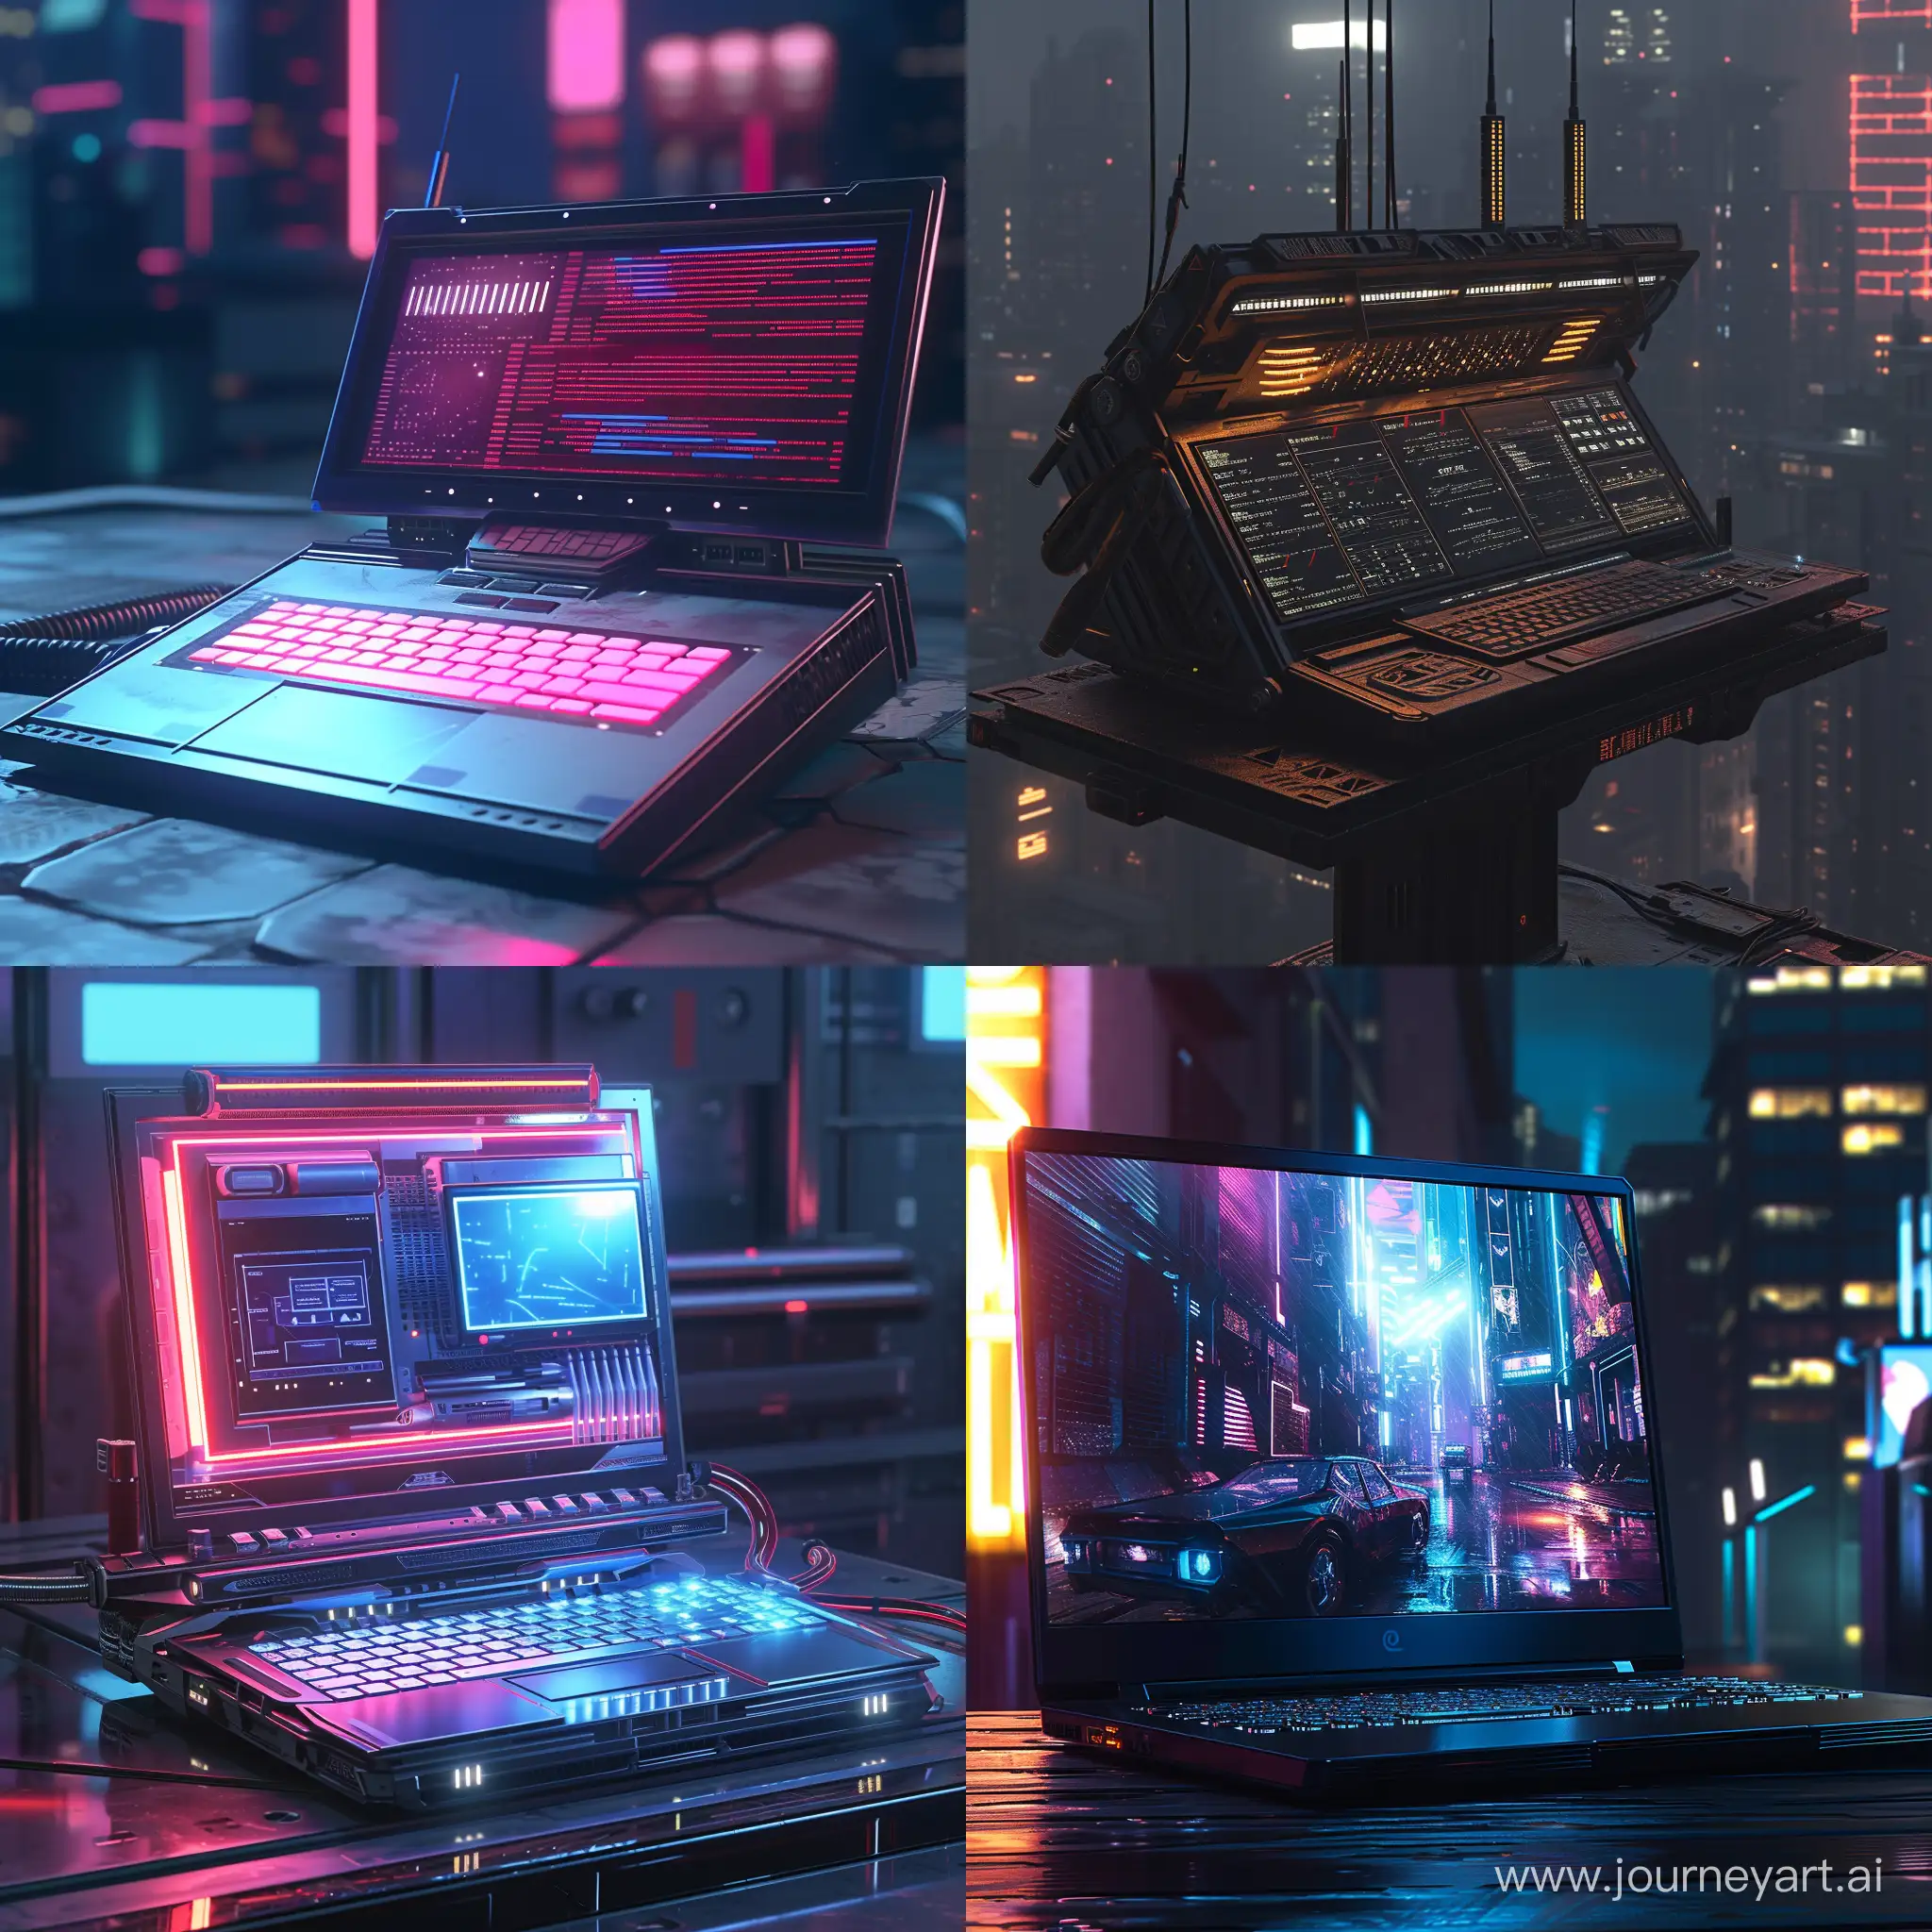 Futuristic-Postcyberpunk-Laptop-in-Cinematic-Style